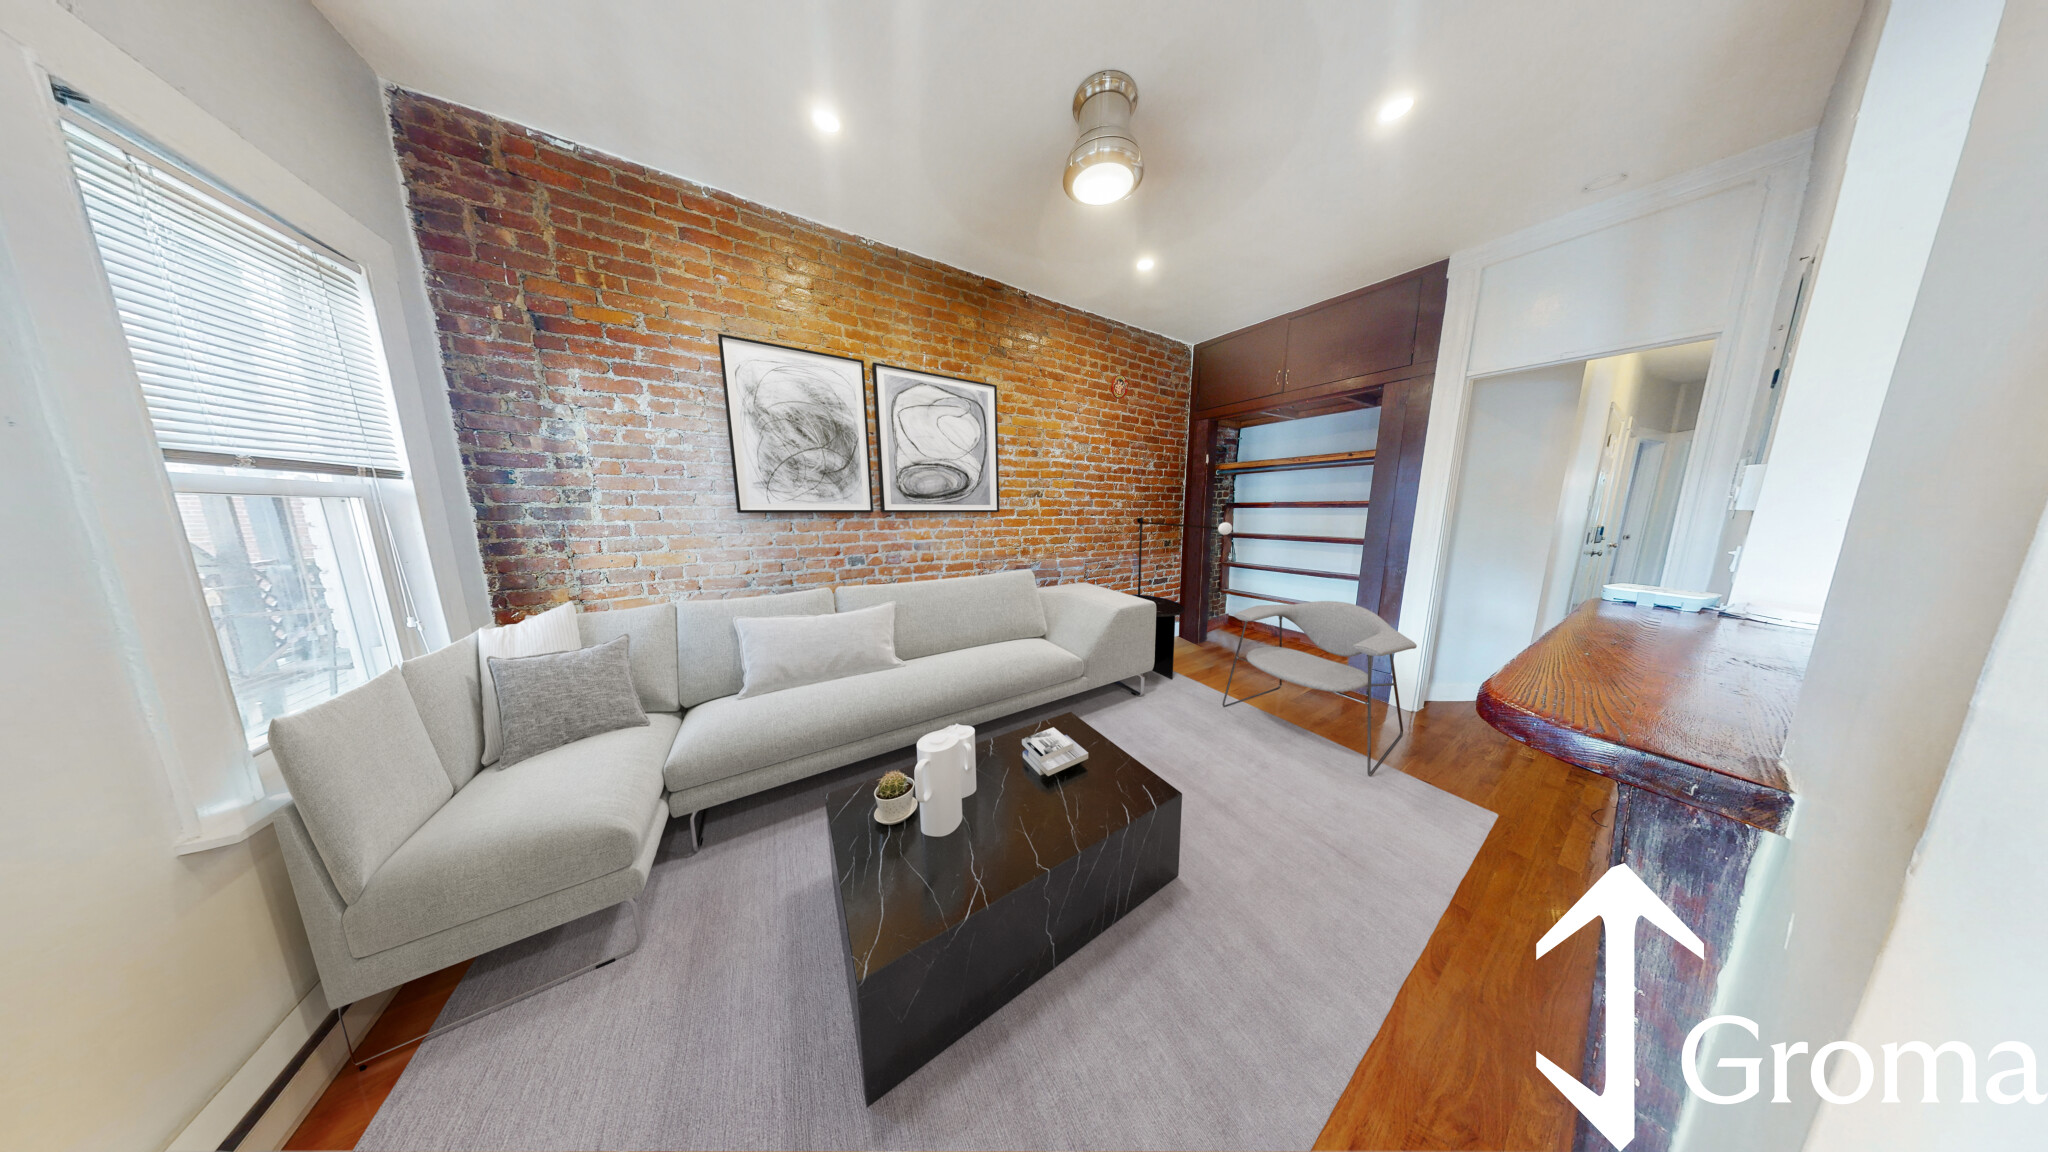 Photos of apartment on Mark St.,Boston MA 02130